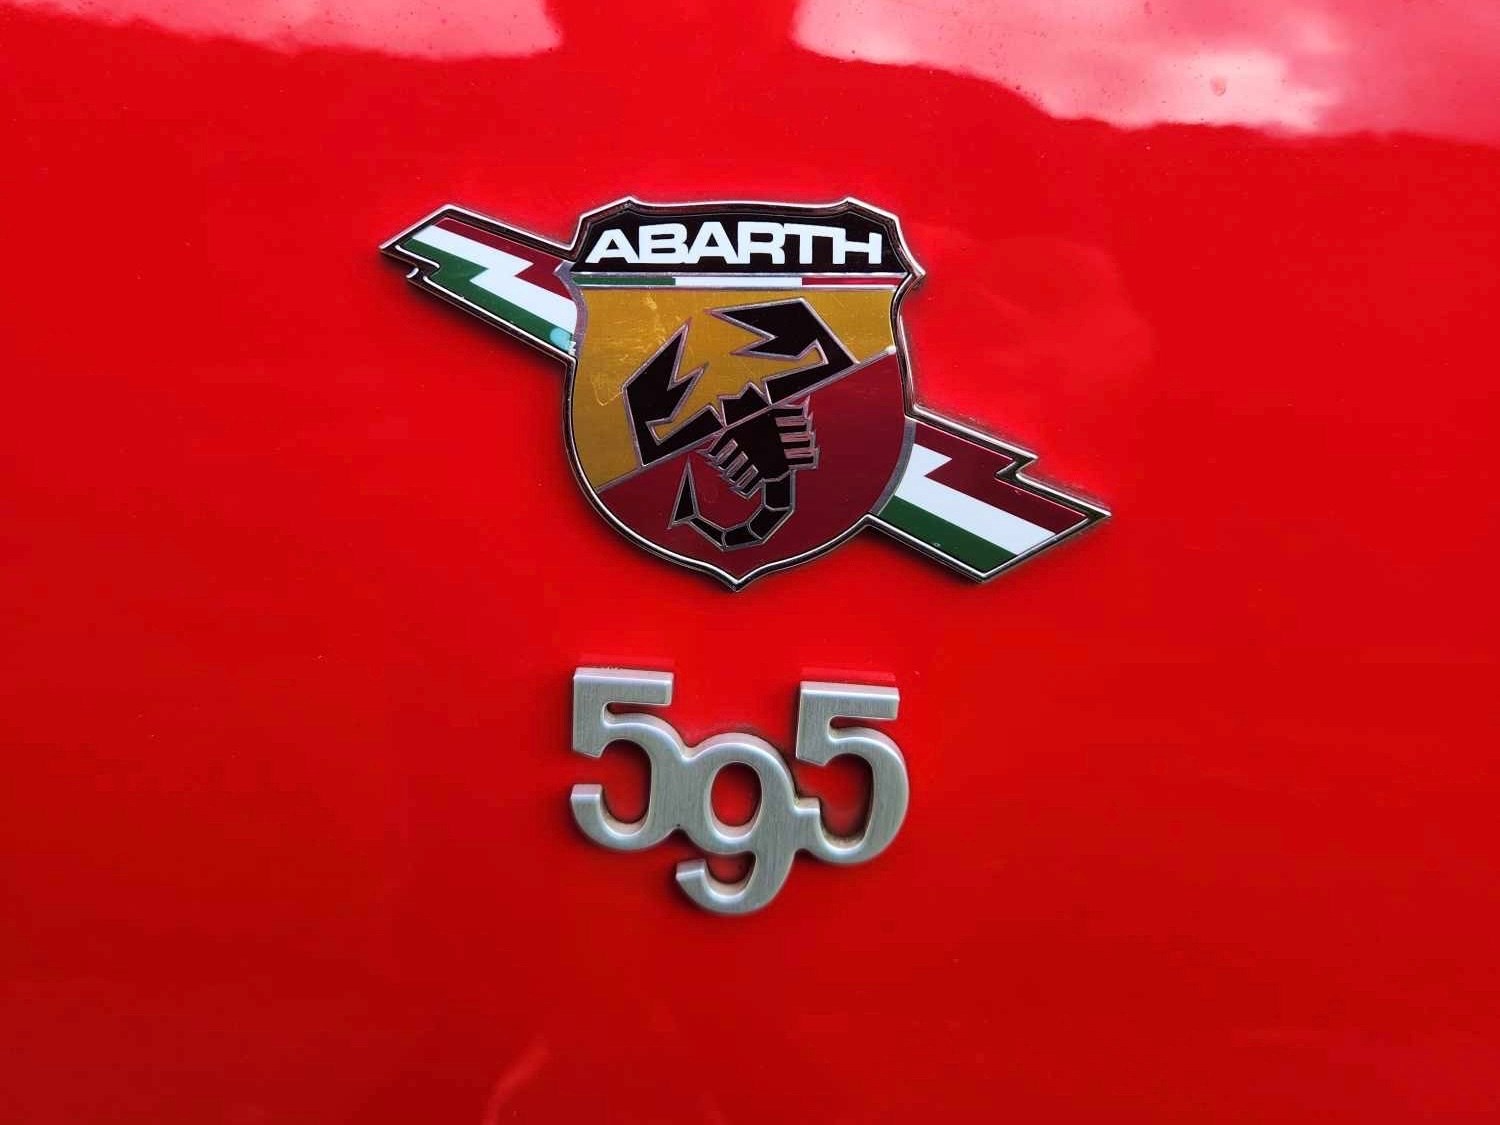 Abarth 595 Listing Image